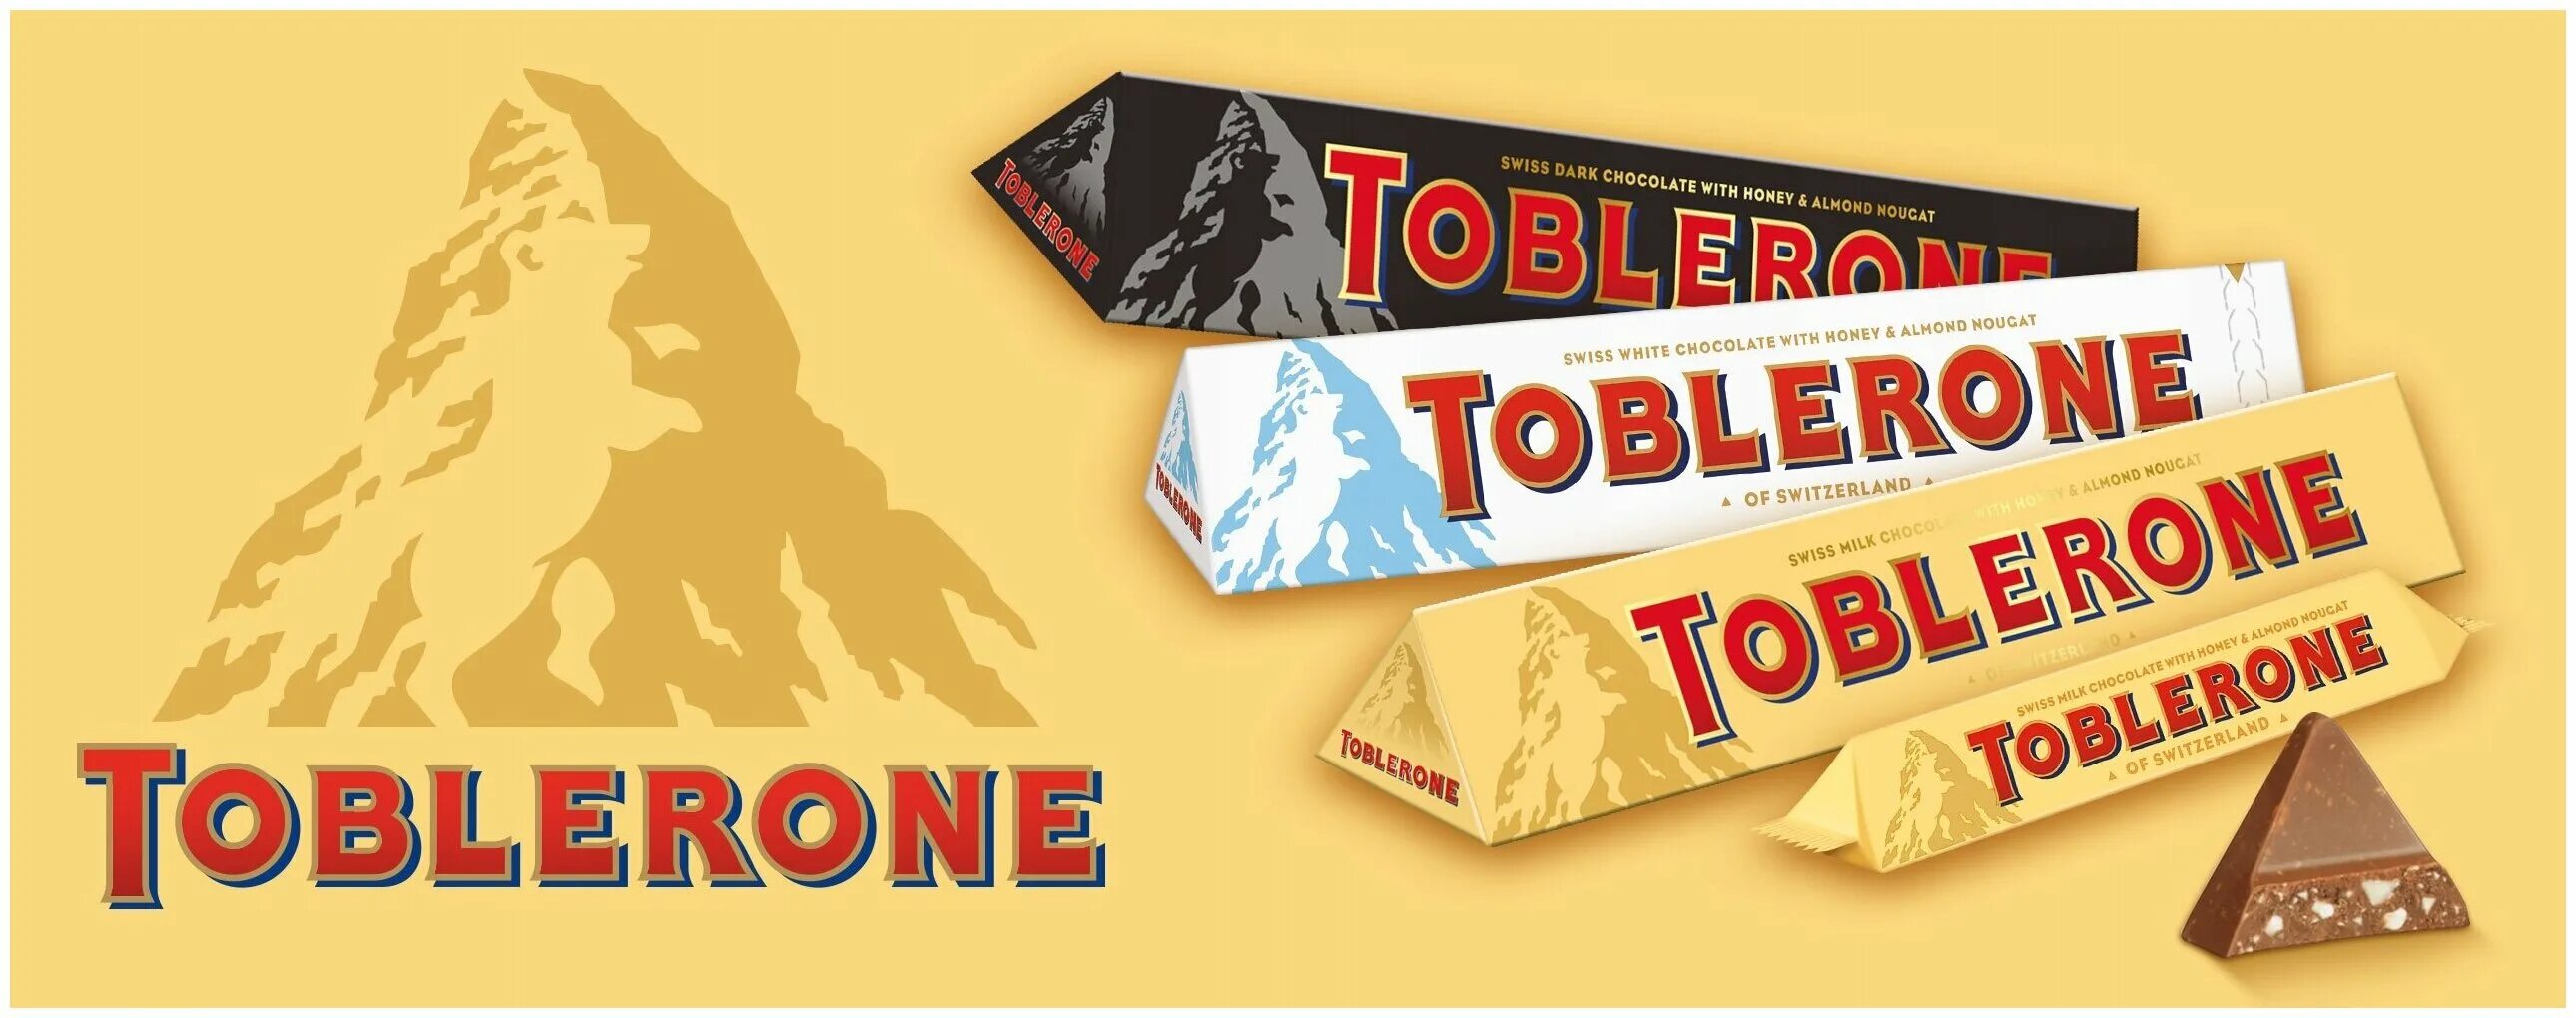 Шоколад toblerone купить. Toblerone 100г белый. Шоколад Тоблерон белый 100г. Шоколад белый Toblerone швейцарский. Таблерон шоколадка швейцарский.